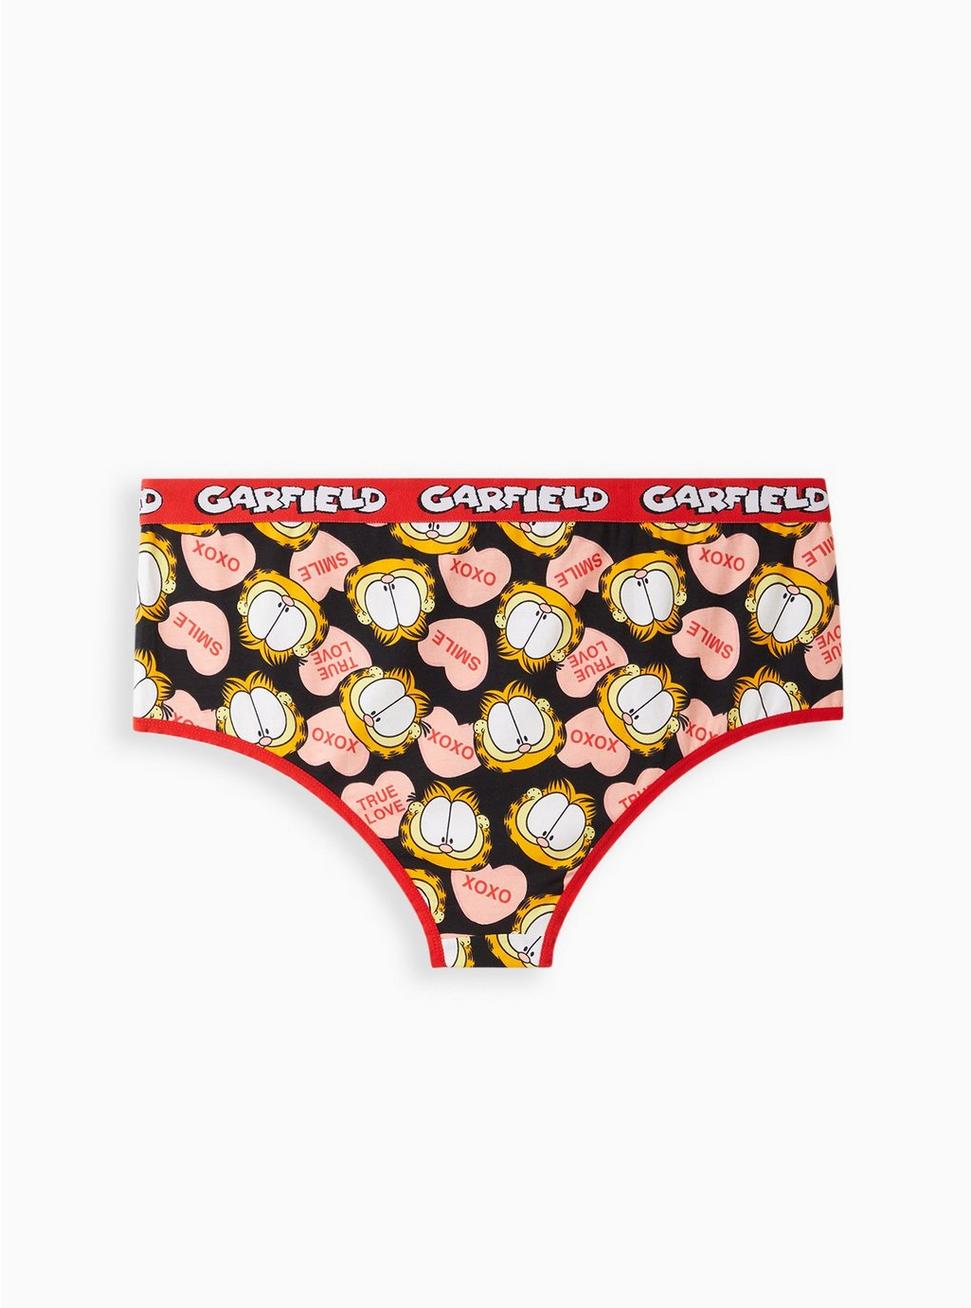 Plus Size - Cheeky Panty - Cotton Garfield Hearts - Torrid